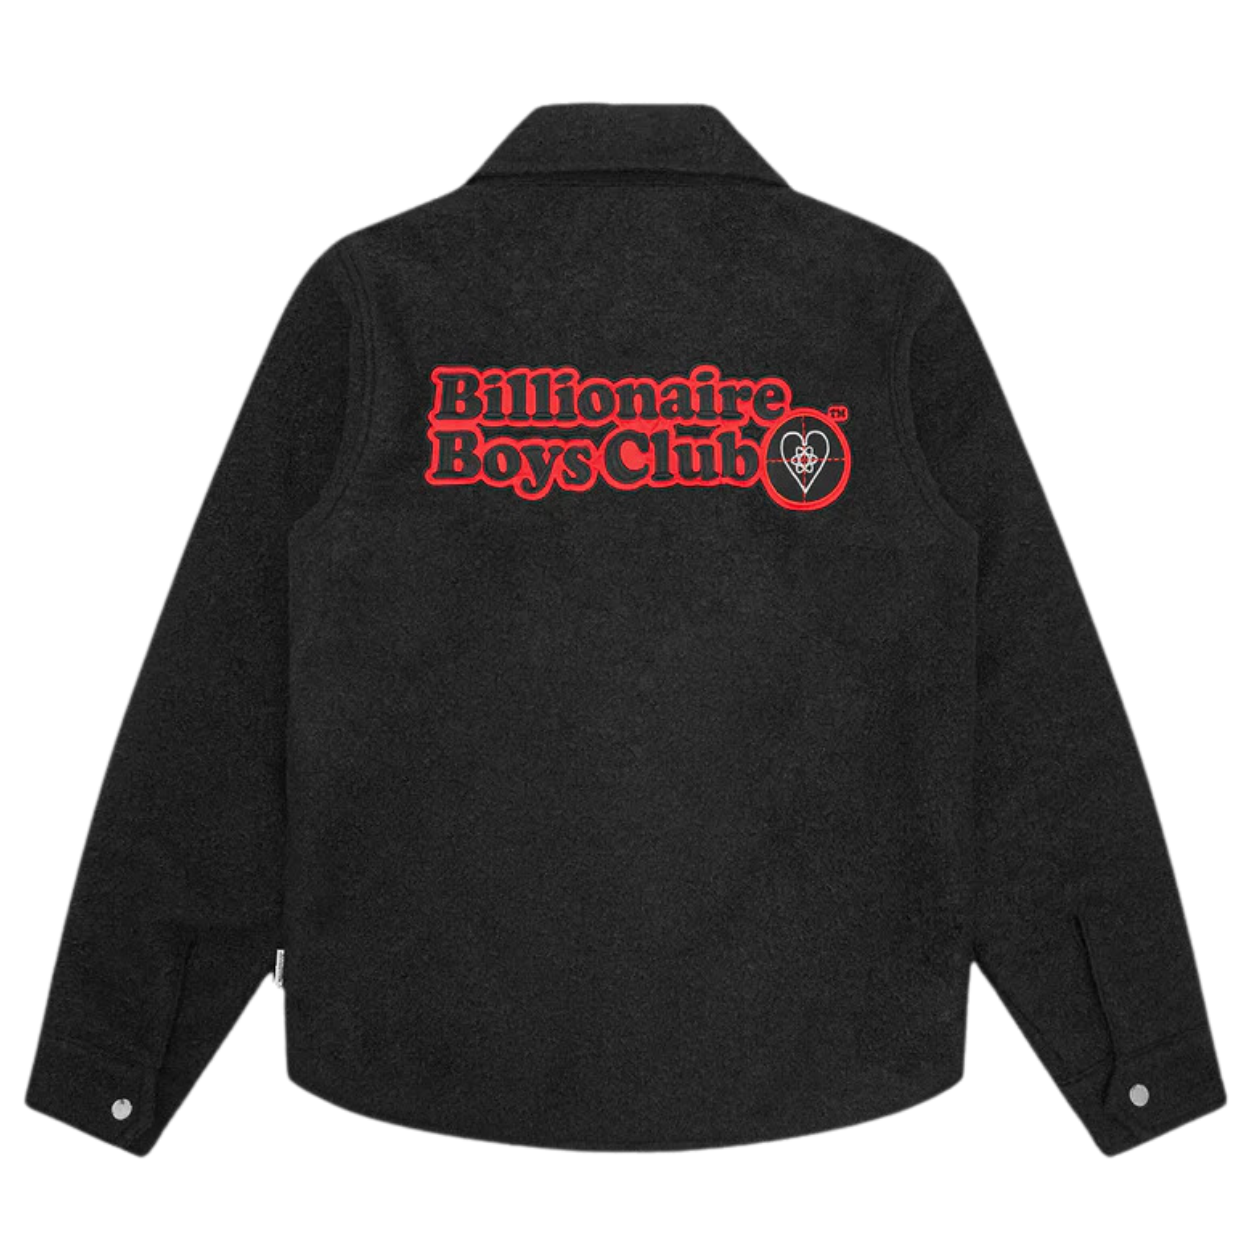 Billionaire Boys Club Black Outdoorsman Overshirt